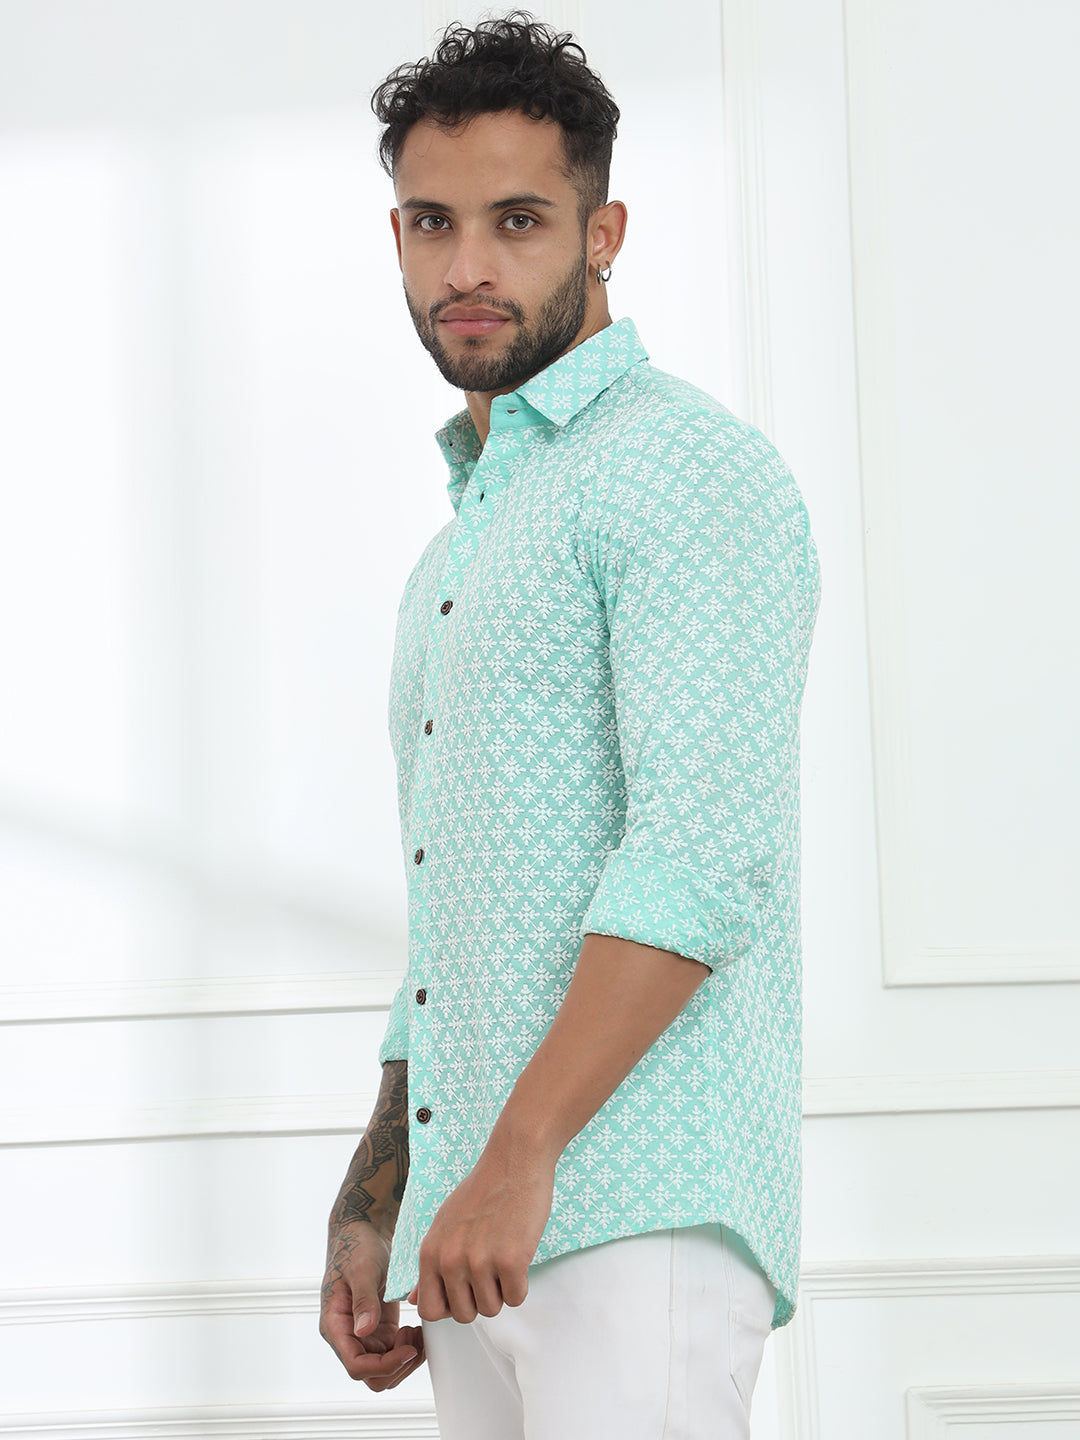 Firangi Yarn Super Soft Full Sleeves Chikankari schiffli Embroided Men's Shirt Sea Green